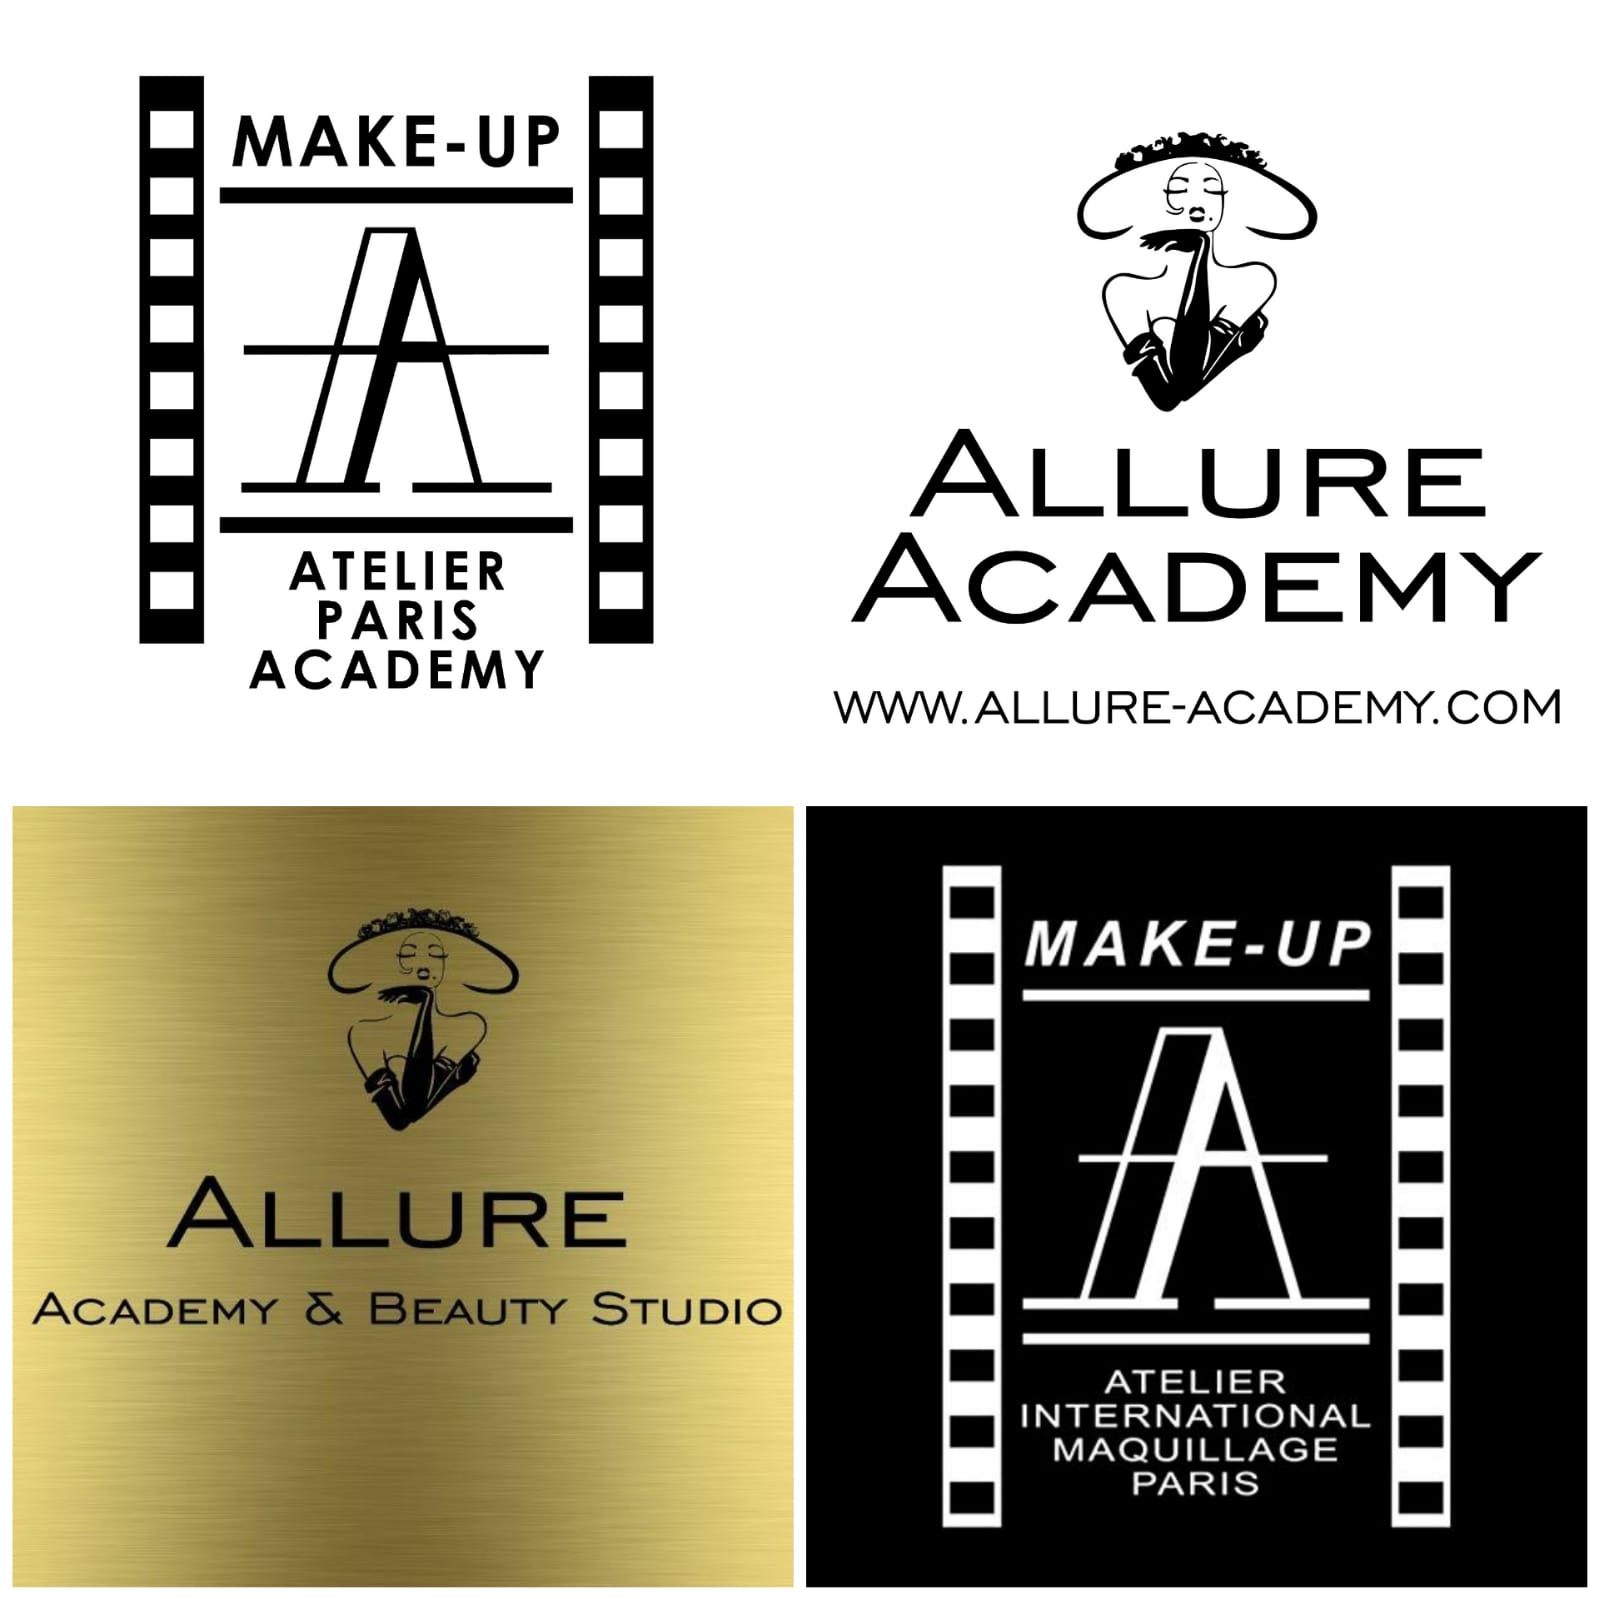 Allure Academy & Beauty Studio